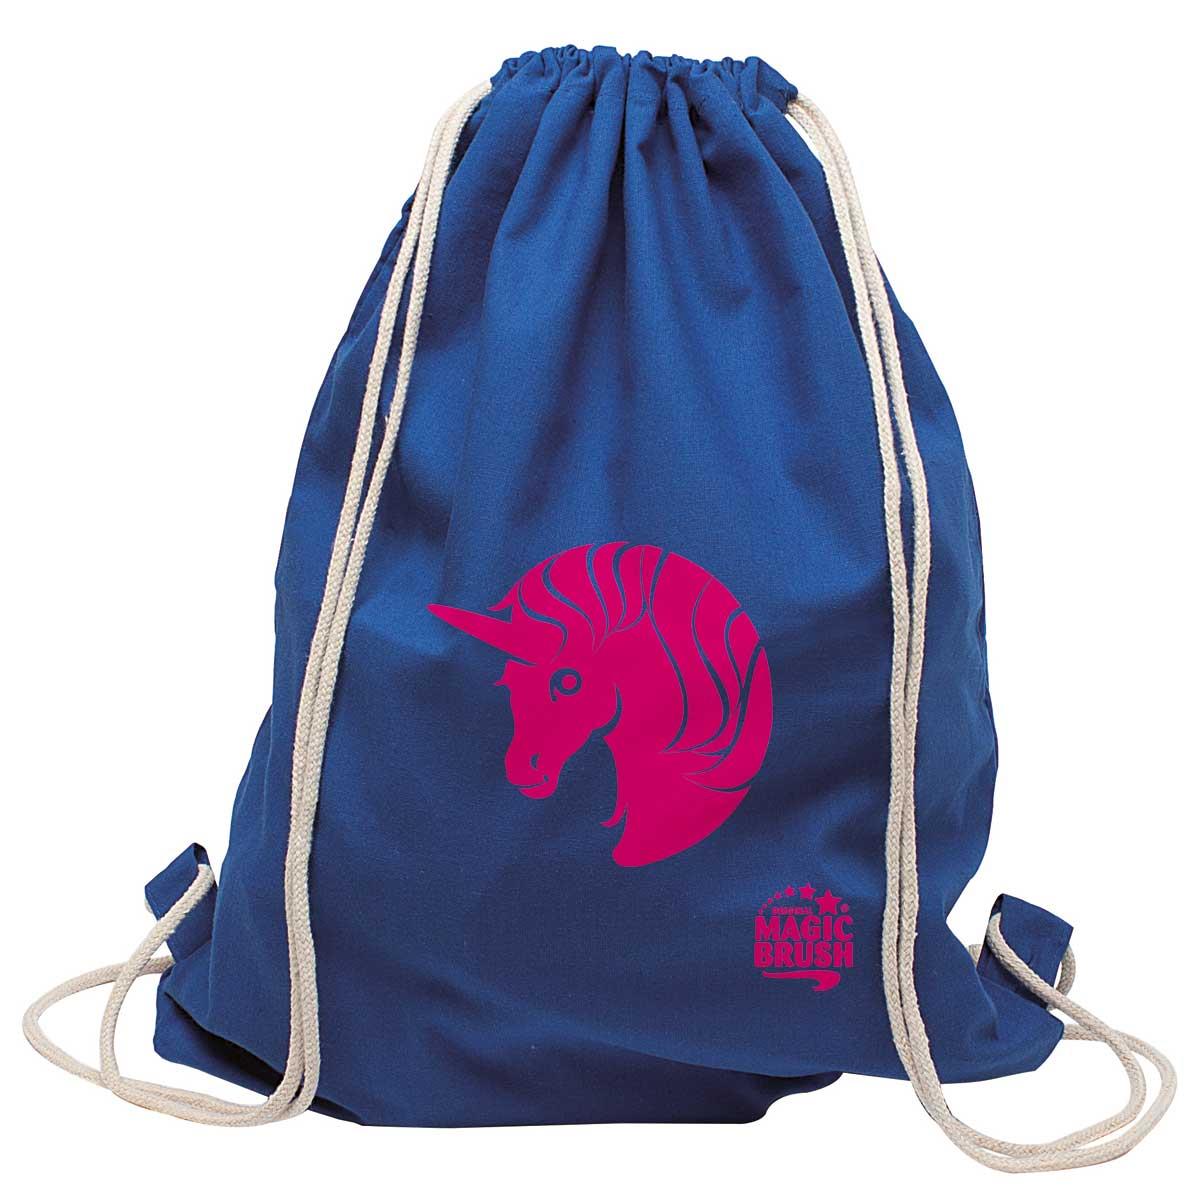 MagicBrush Bag Unicorn